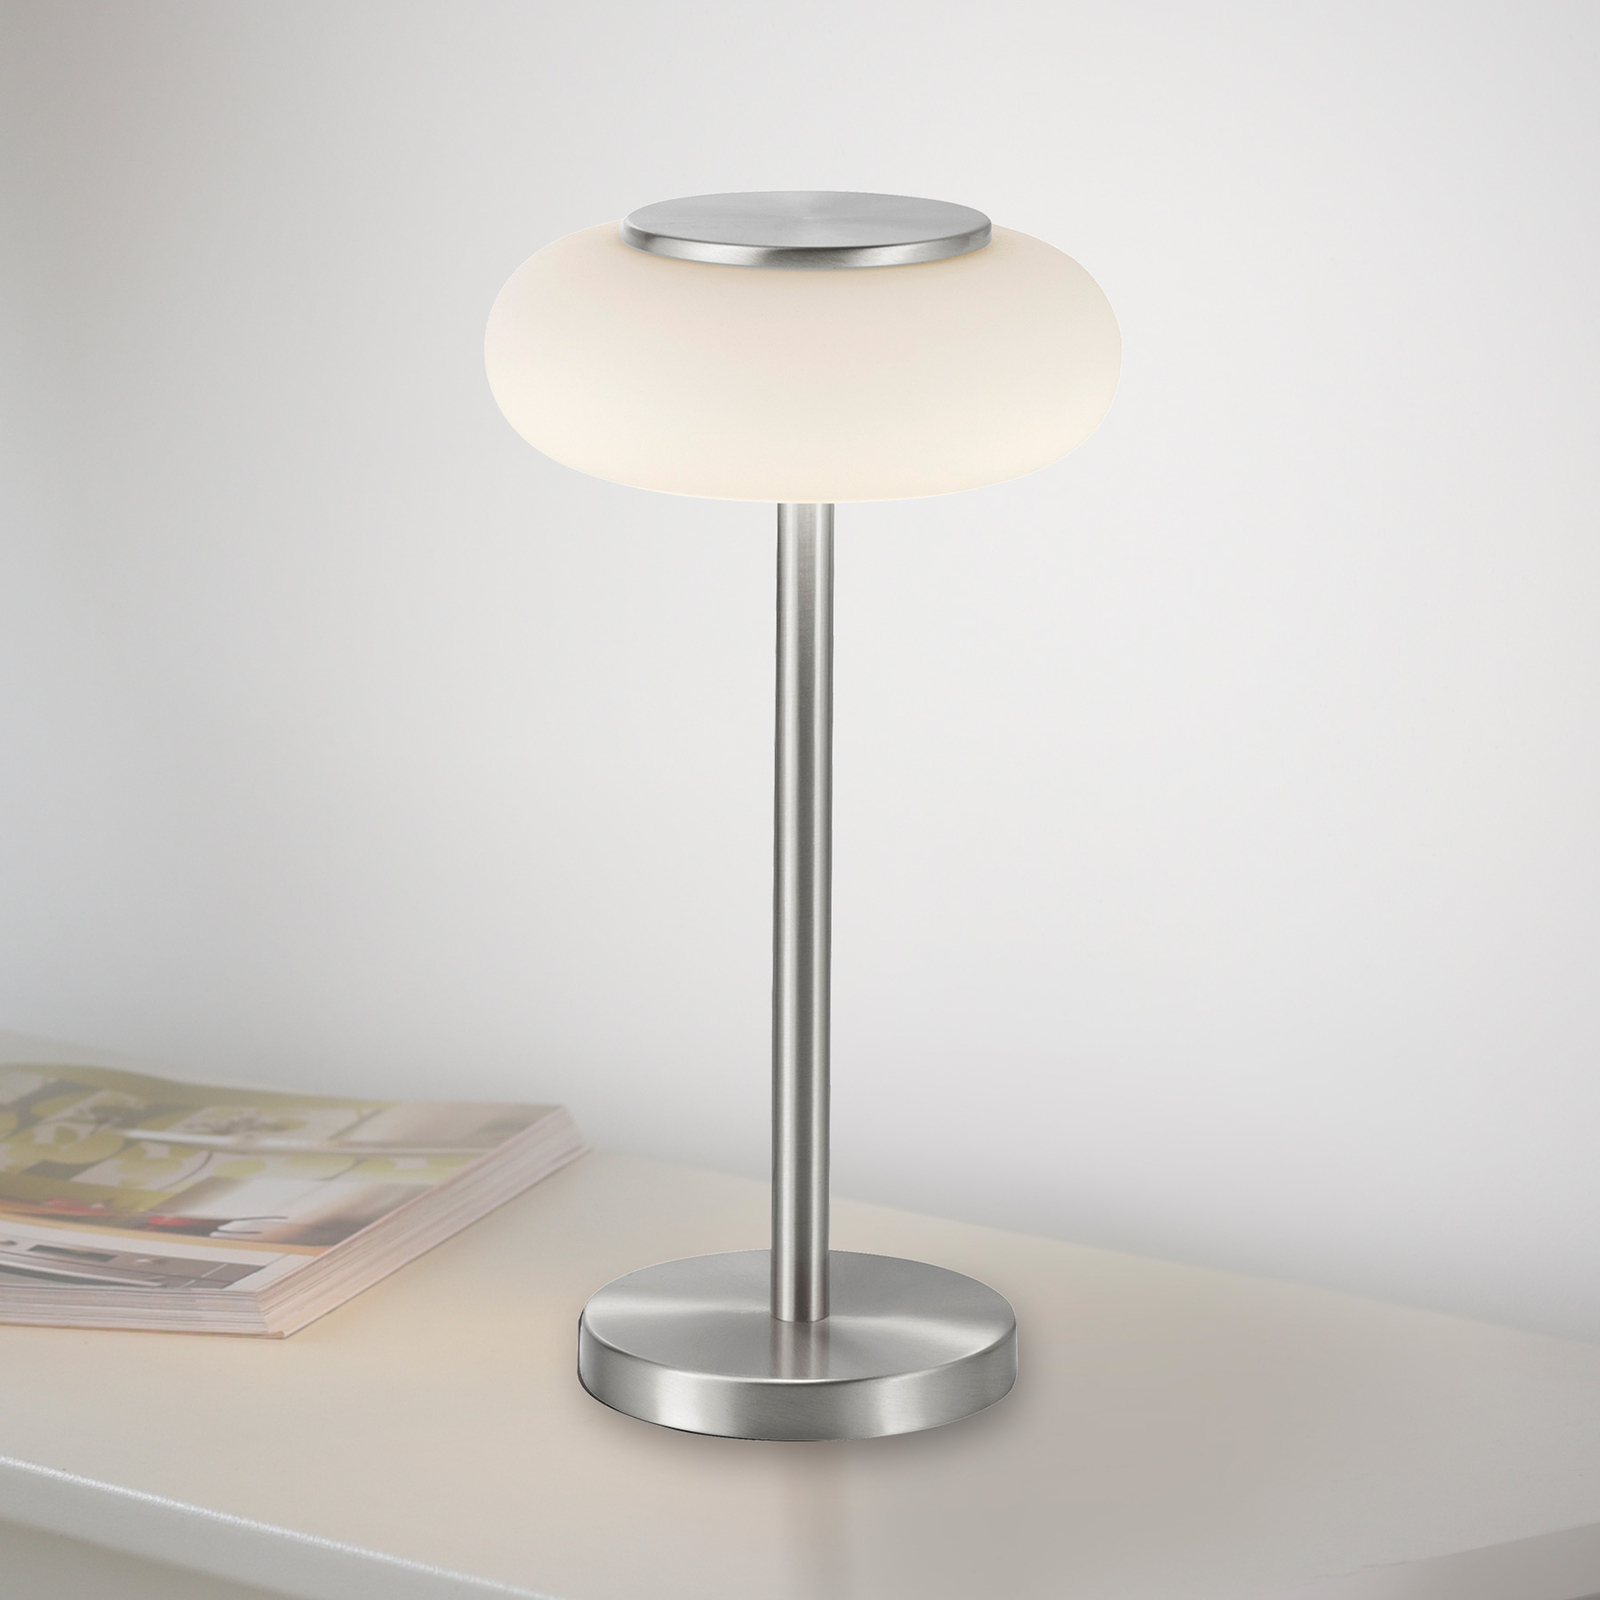 Paul Neuhaus Q-ETIENNE stolová LED lampa, oceľ